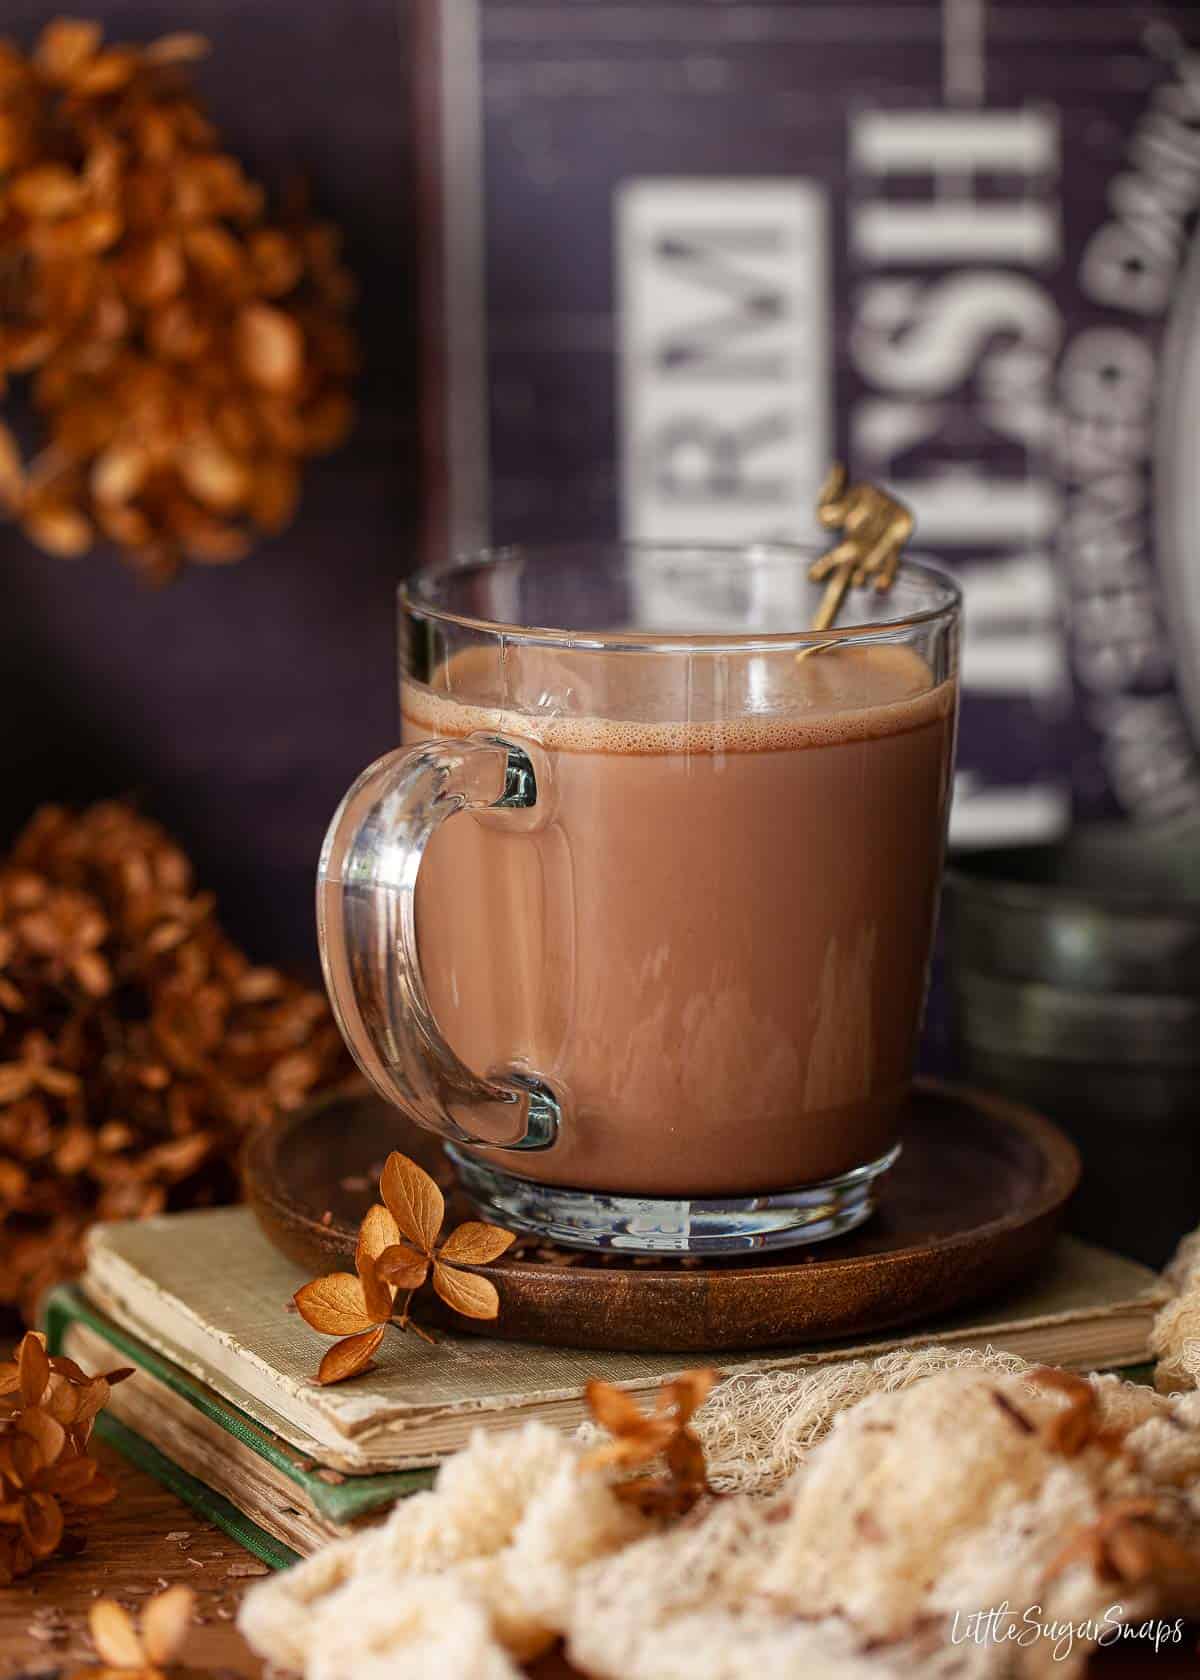 Hot chocolate flavoured with Baileys Irish Cream in a large glass mug.